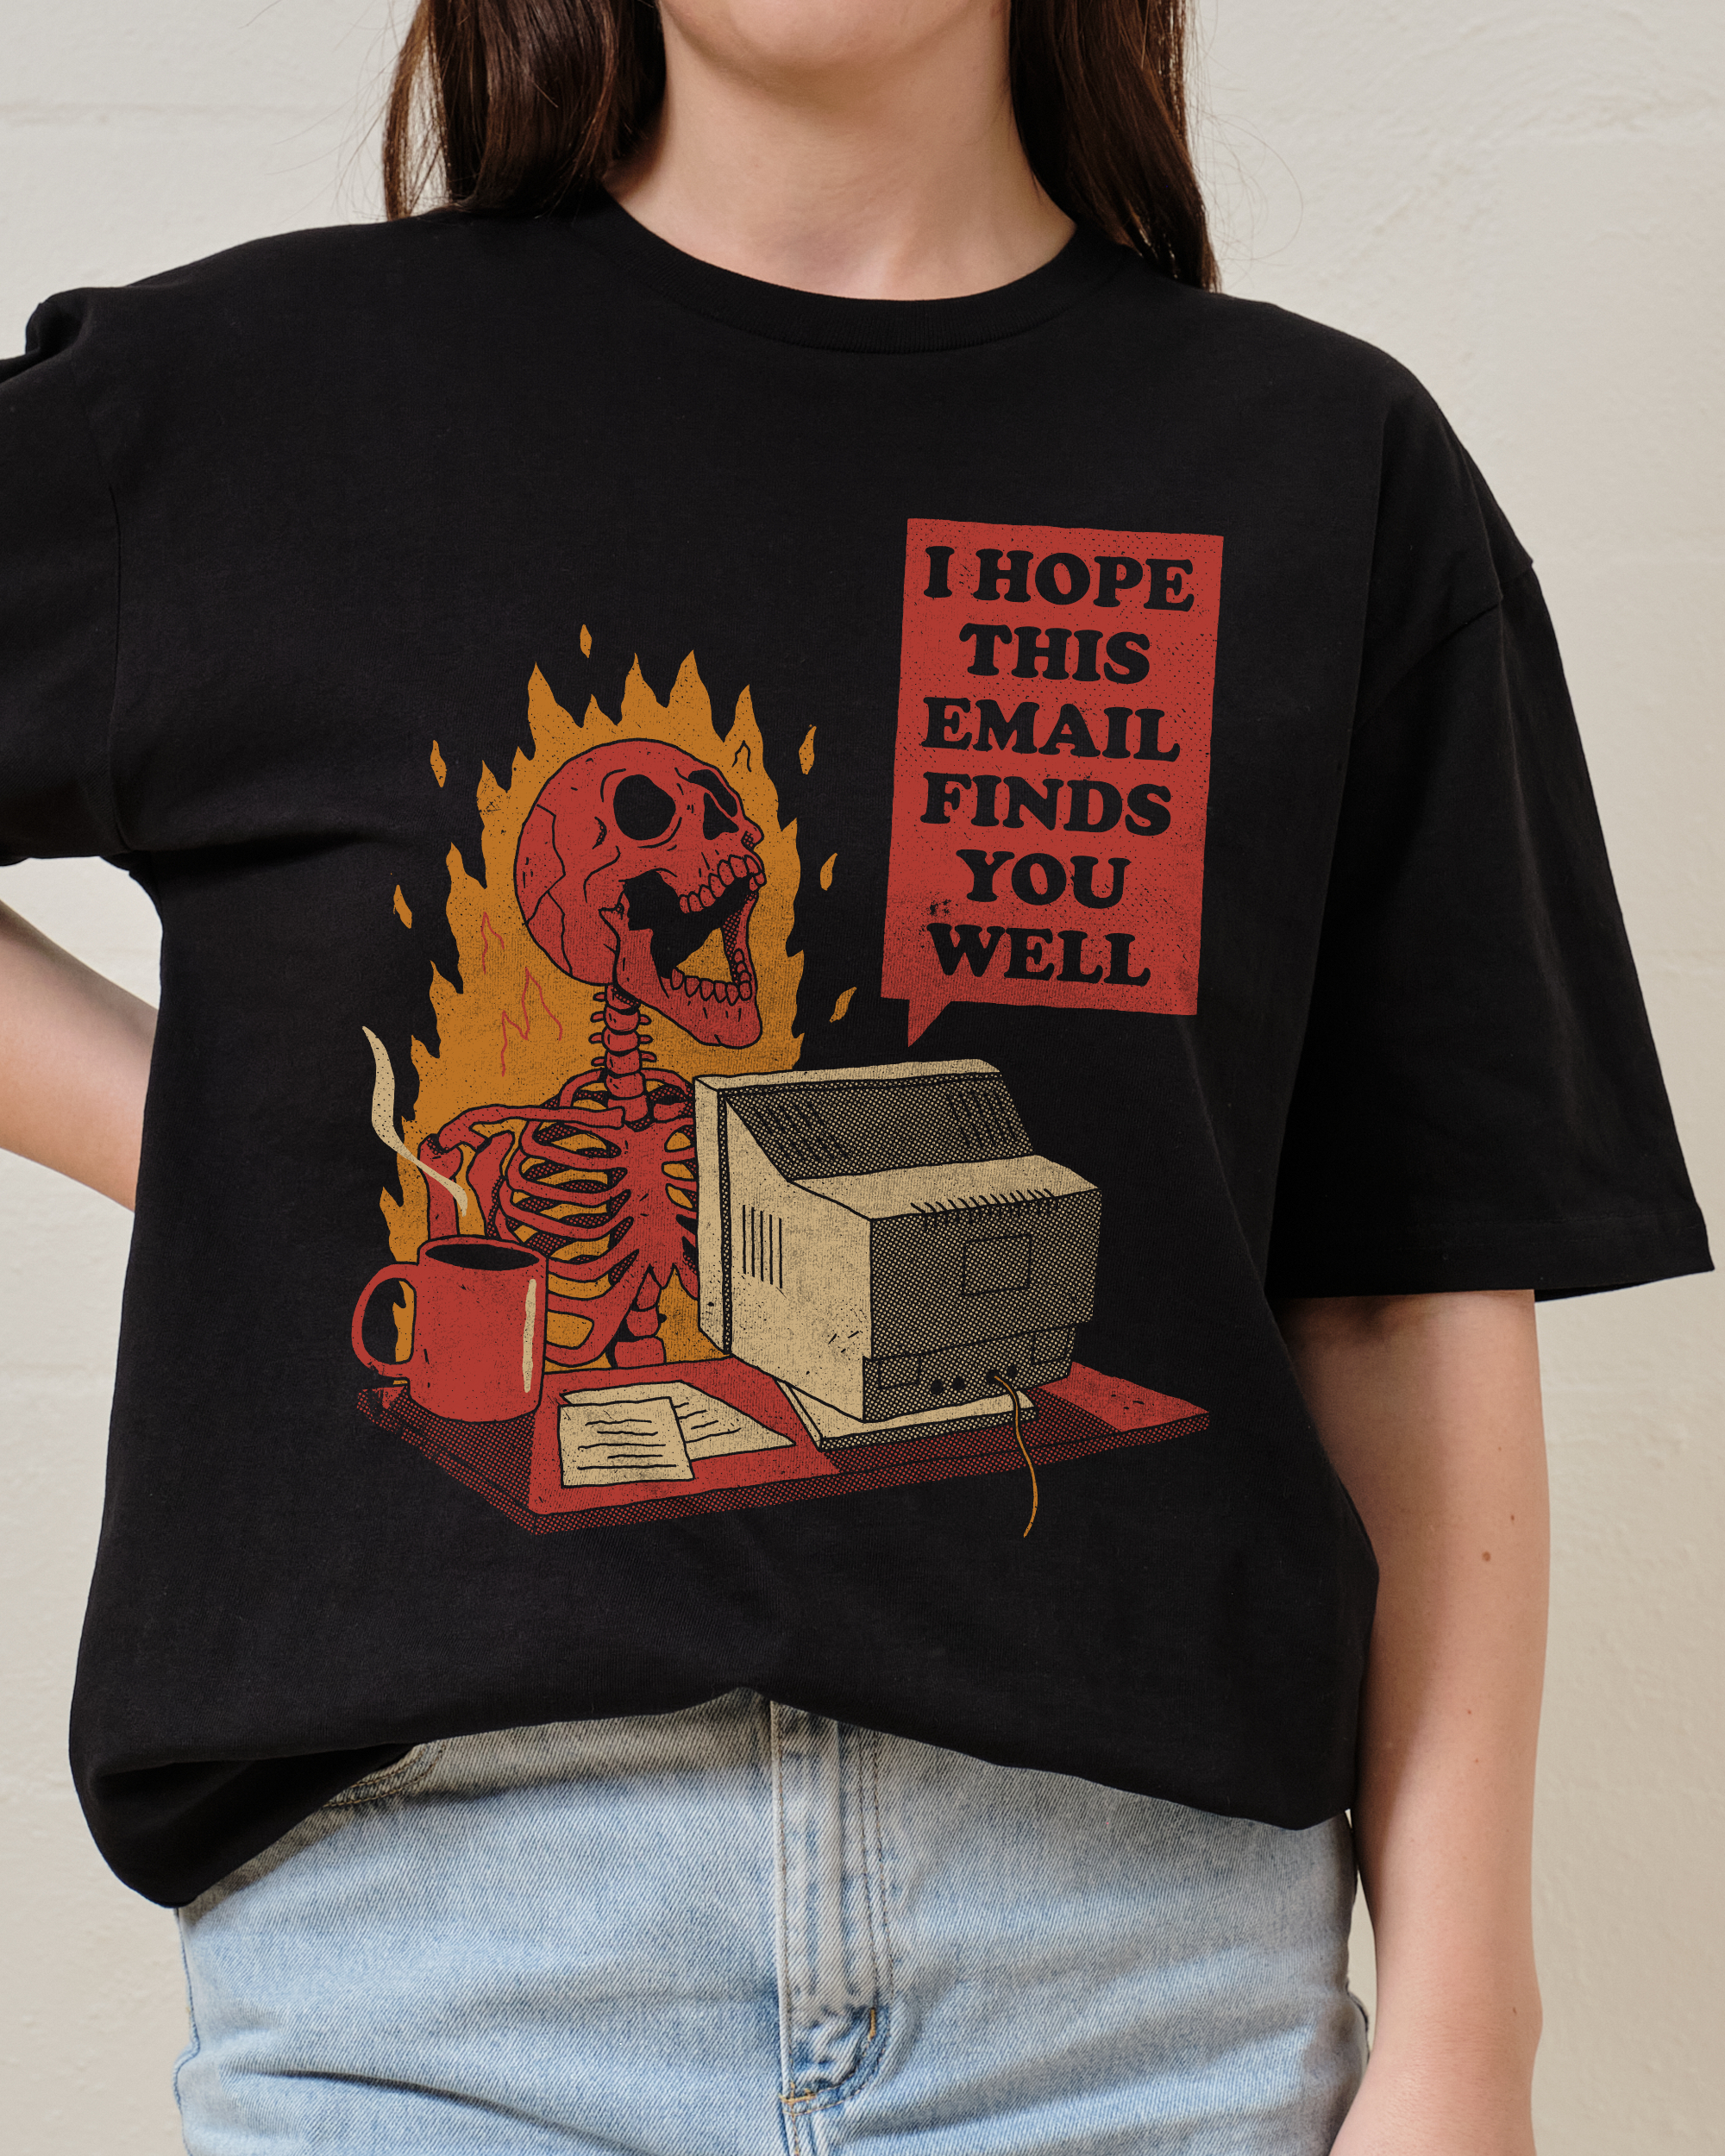 You Got Mail T-Shirt Australia Online